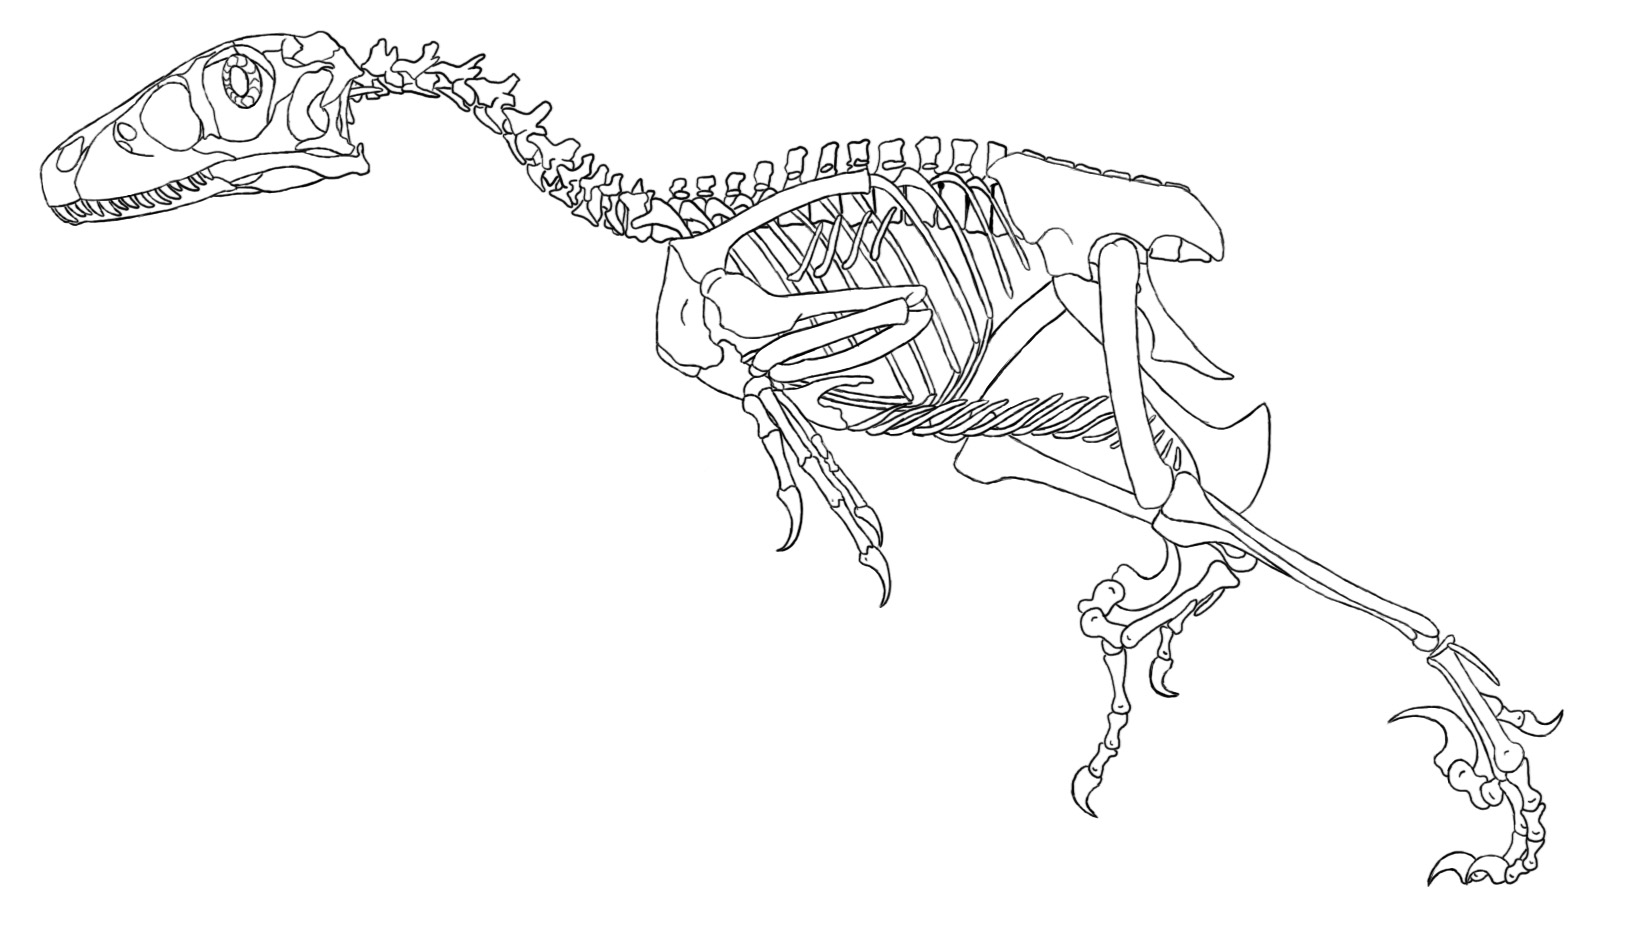 Dinosaur Skeleton Coloring Pages at GetColorings.com | Free printable